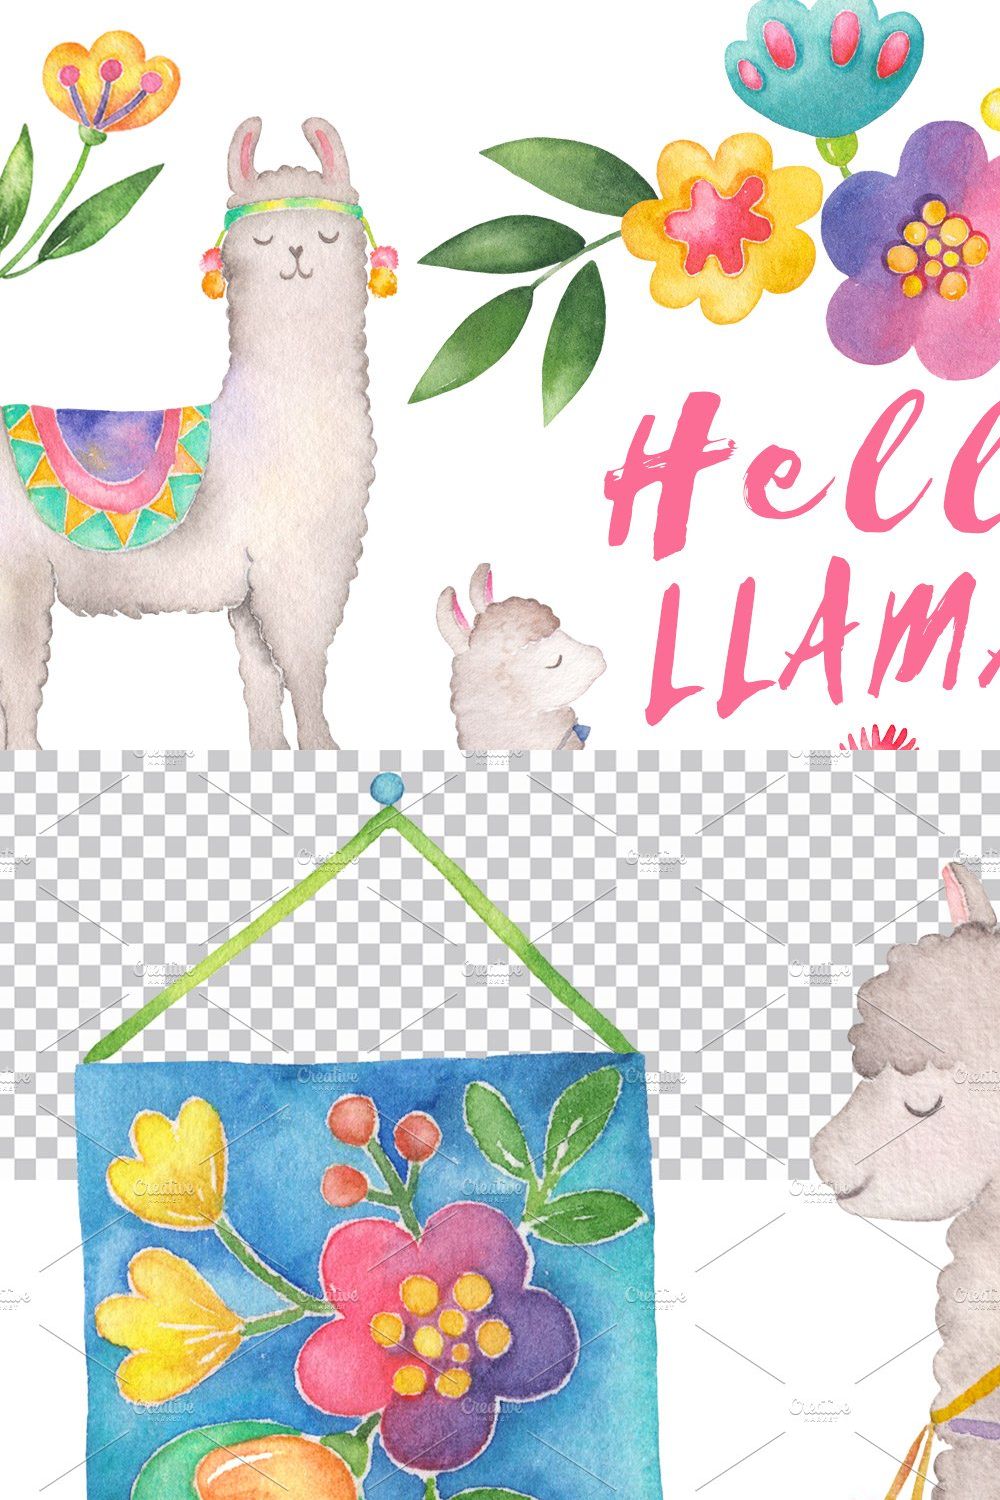 Hello, Llama watercolor clipart set pinterest preview image.